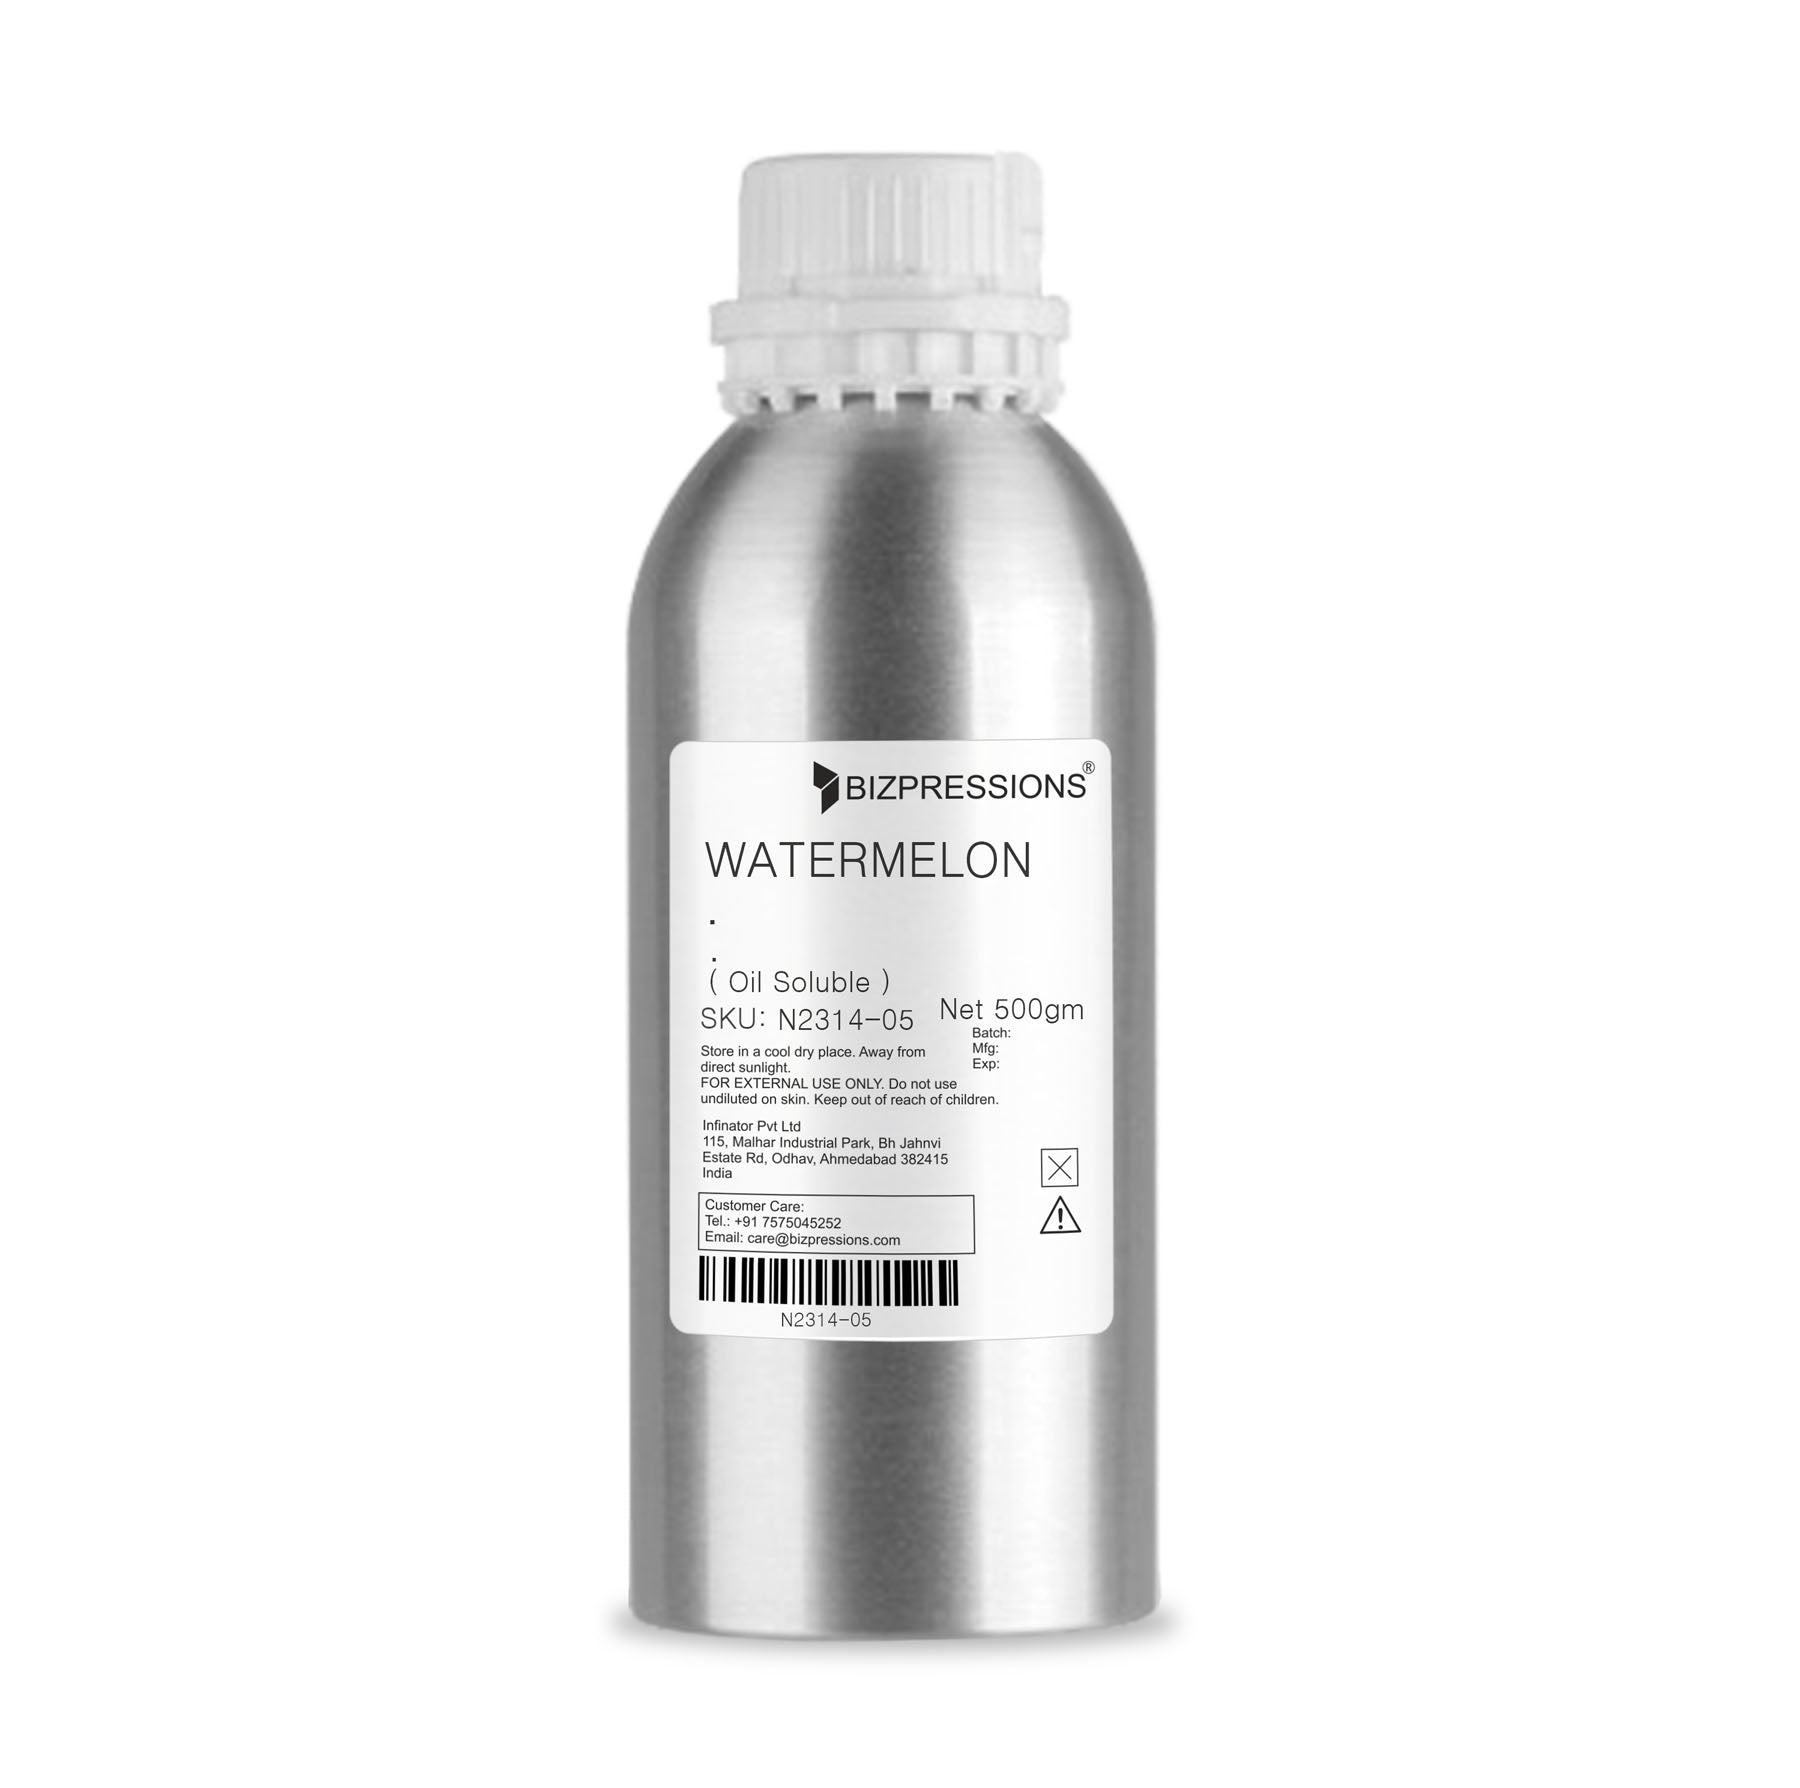 WATERMELON - Fragrance ( Oil Soluble ) - 500 gm